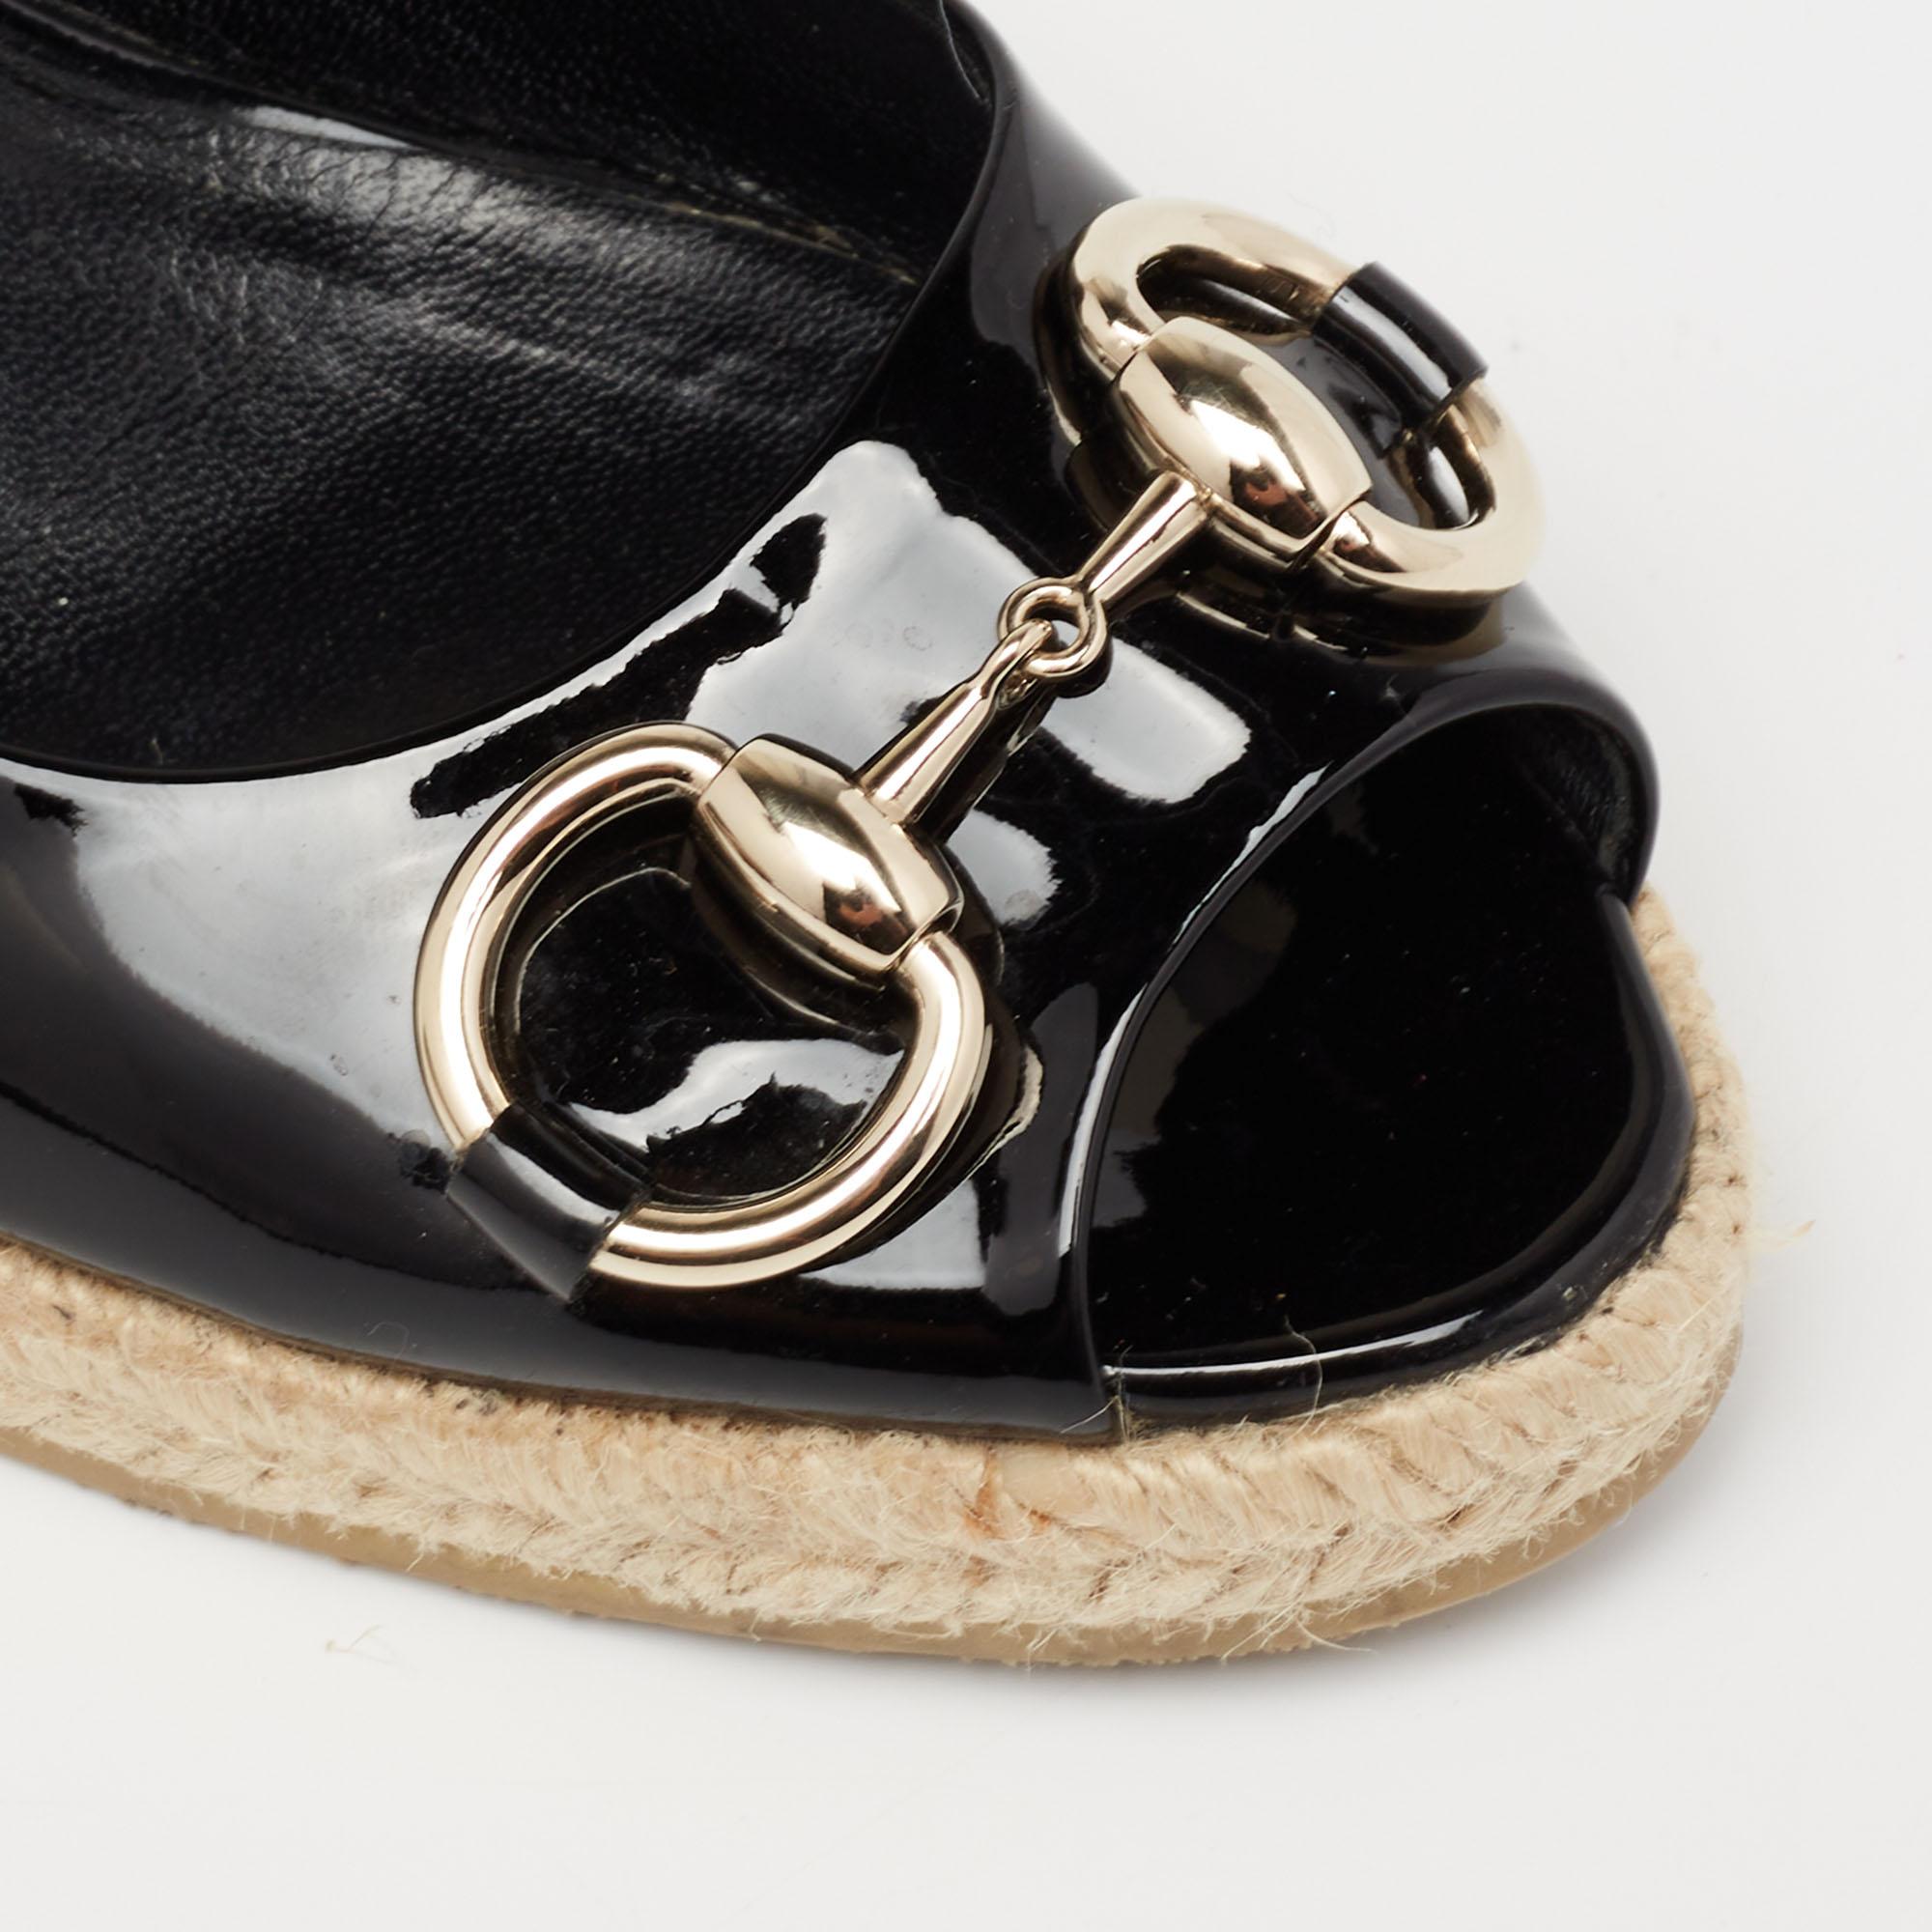 Gucci Black Patent Leather Horsebit Peep-Toe Wedge Pumps Size 37 3